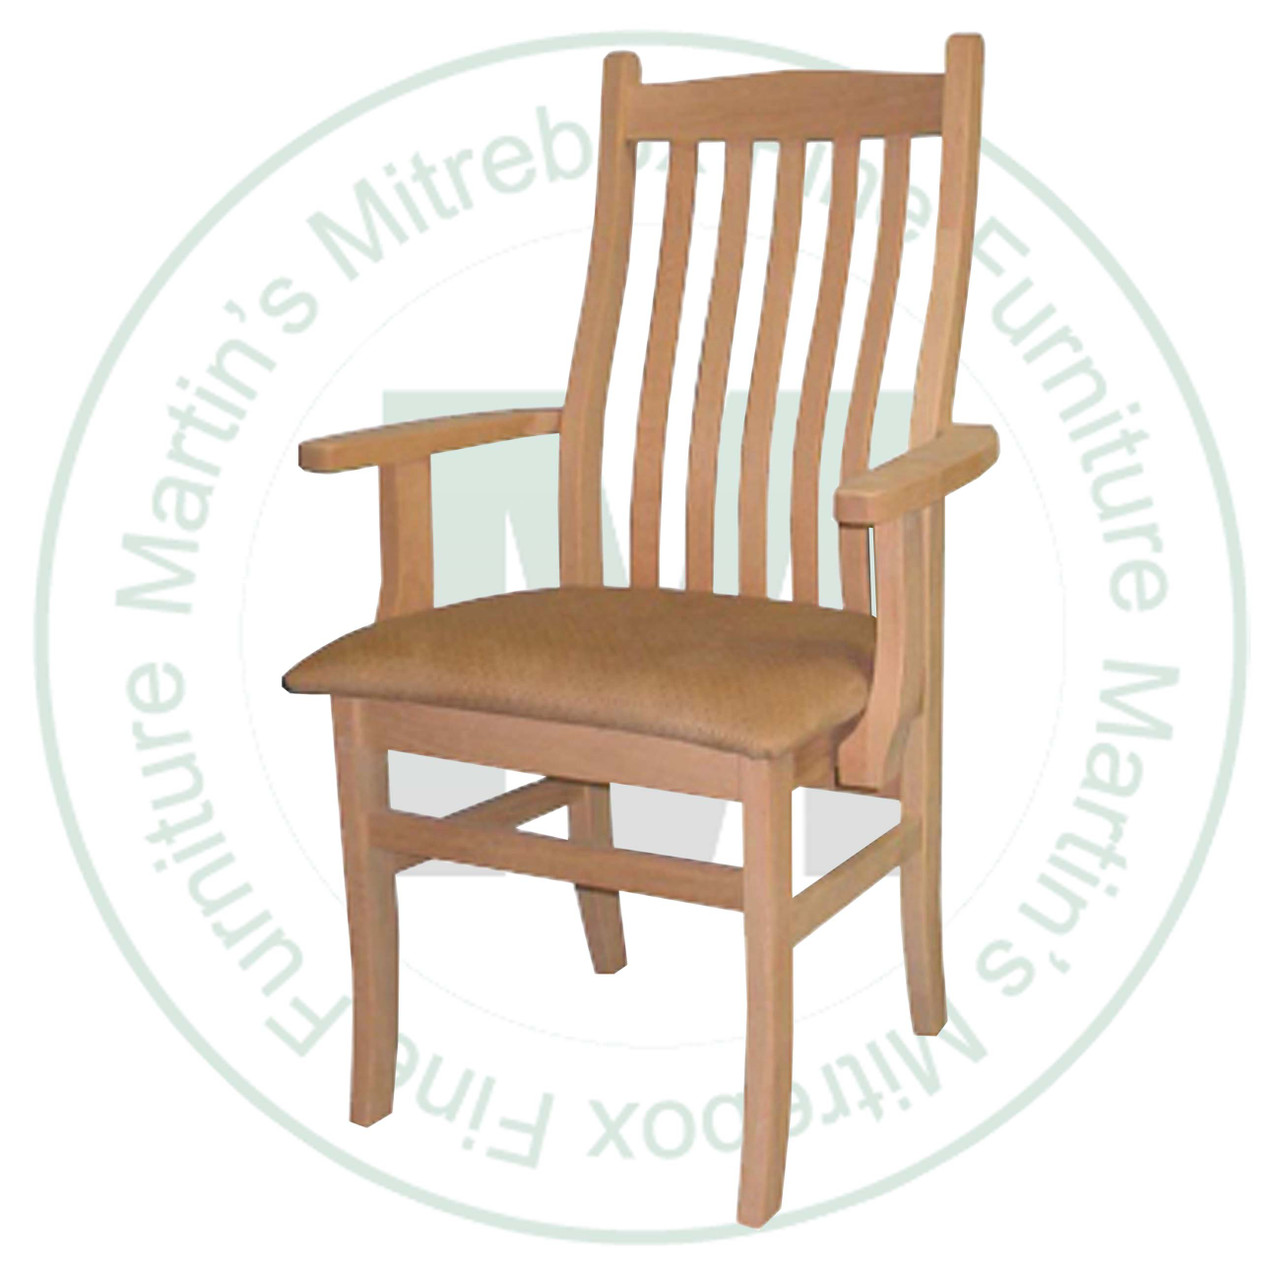 Oak Mini Contour Mission Arm Chair Has Upholstered Seat